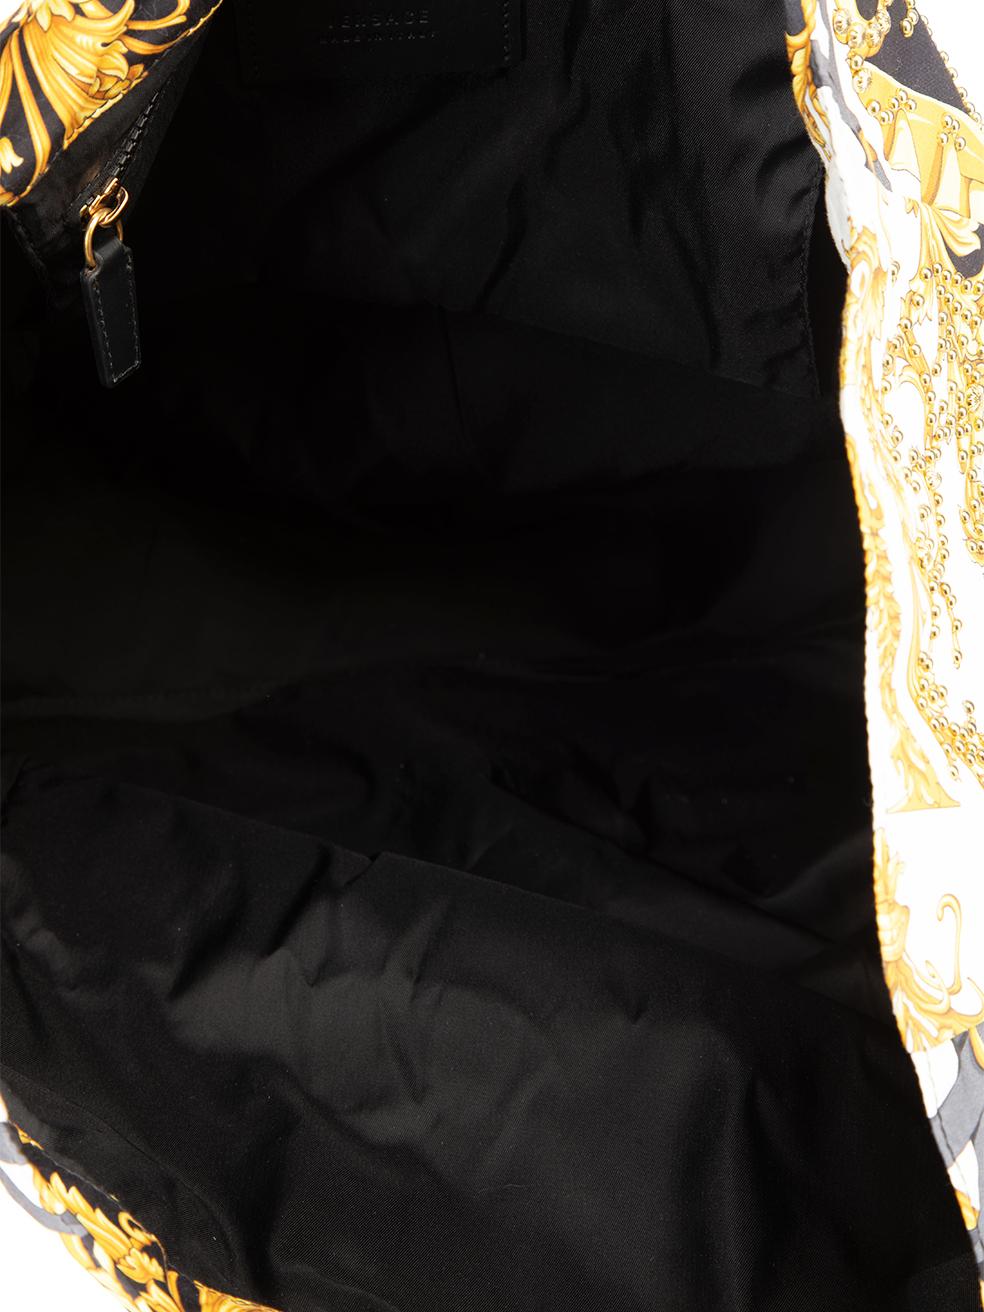 Versace Women's Barocco Printed Studded Large Tote Bag 3